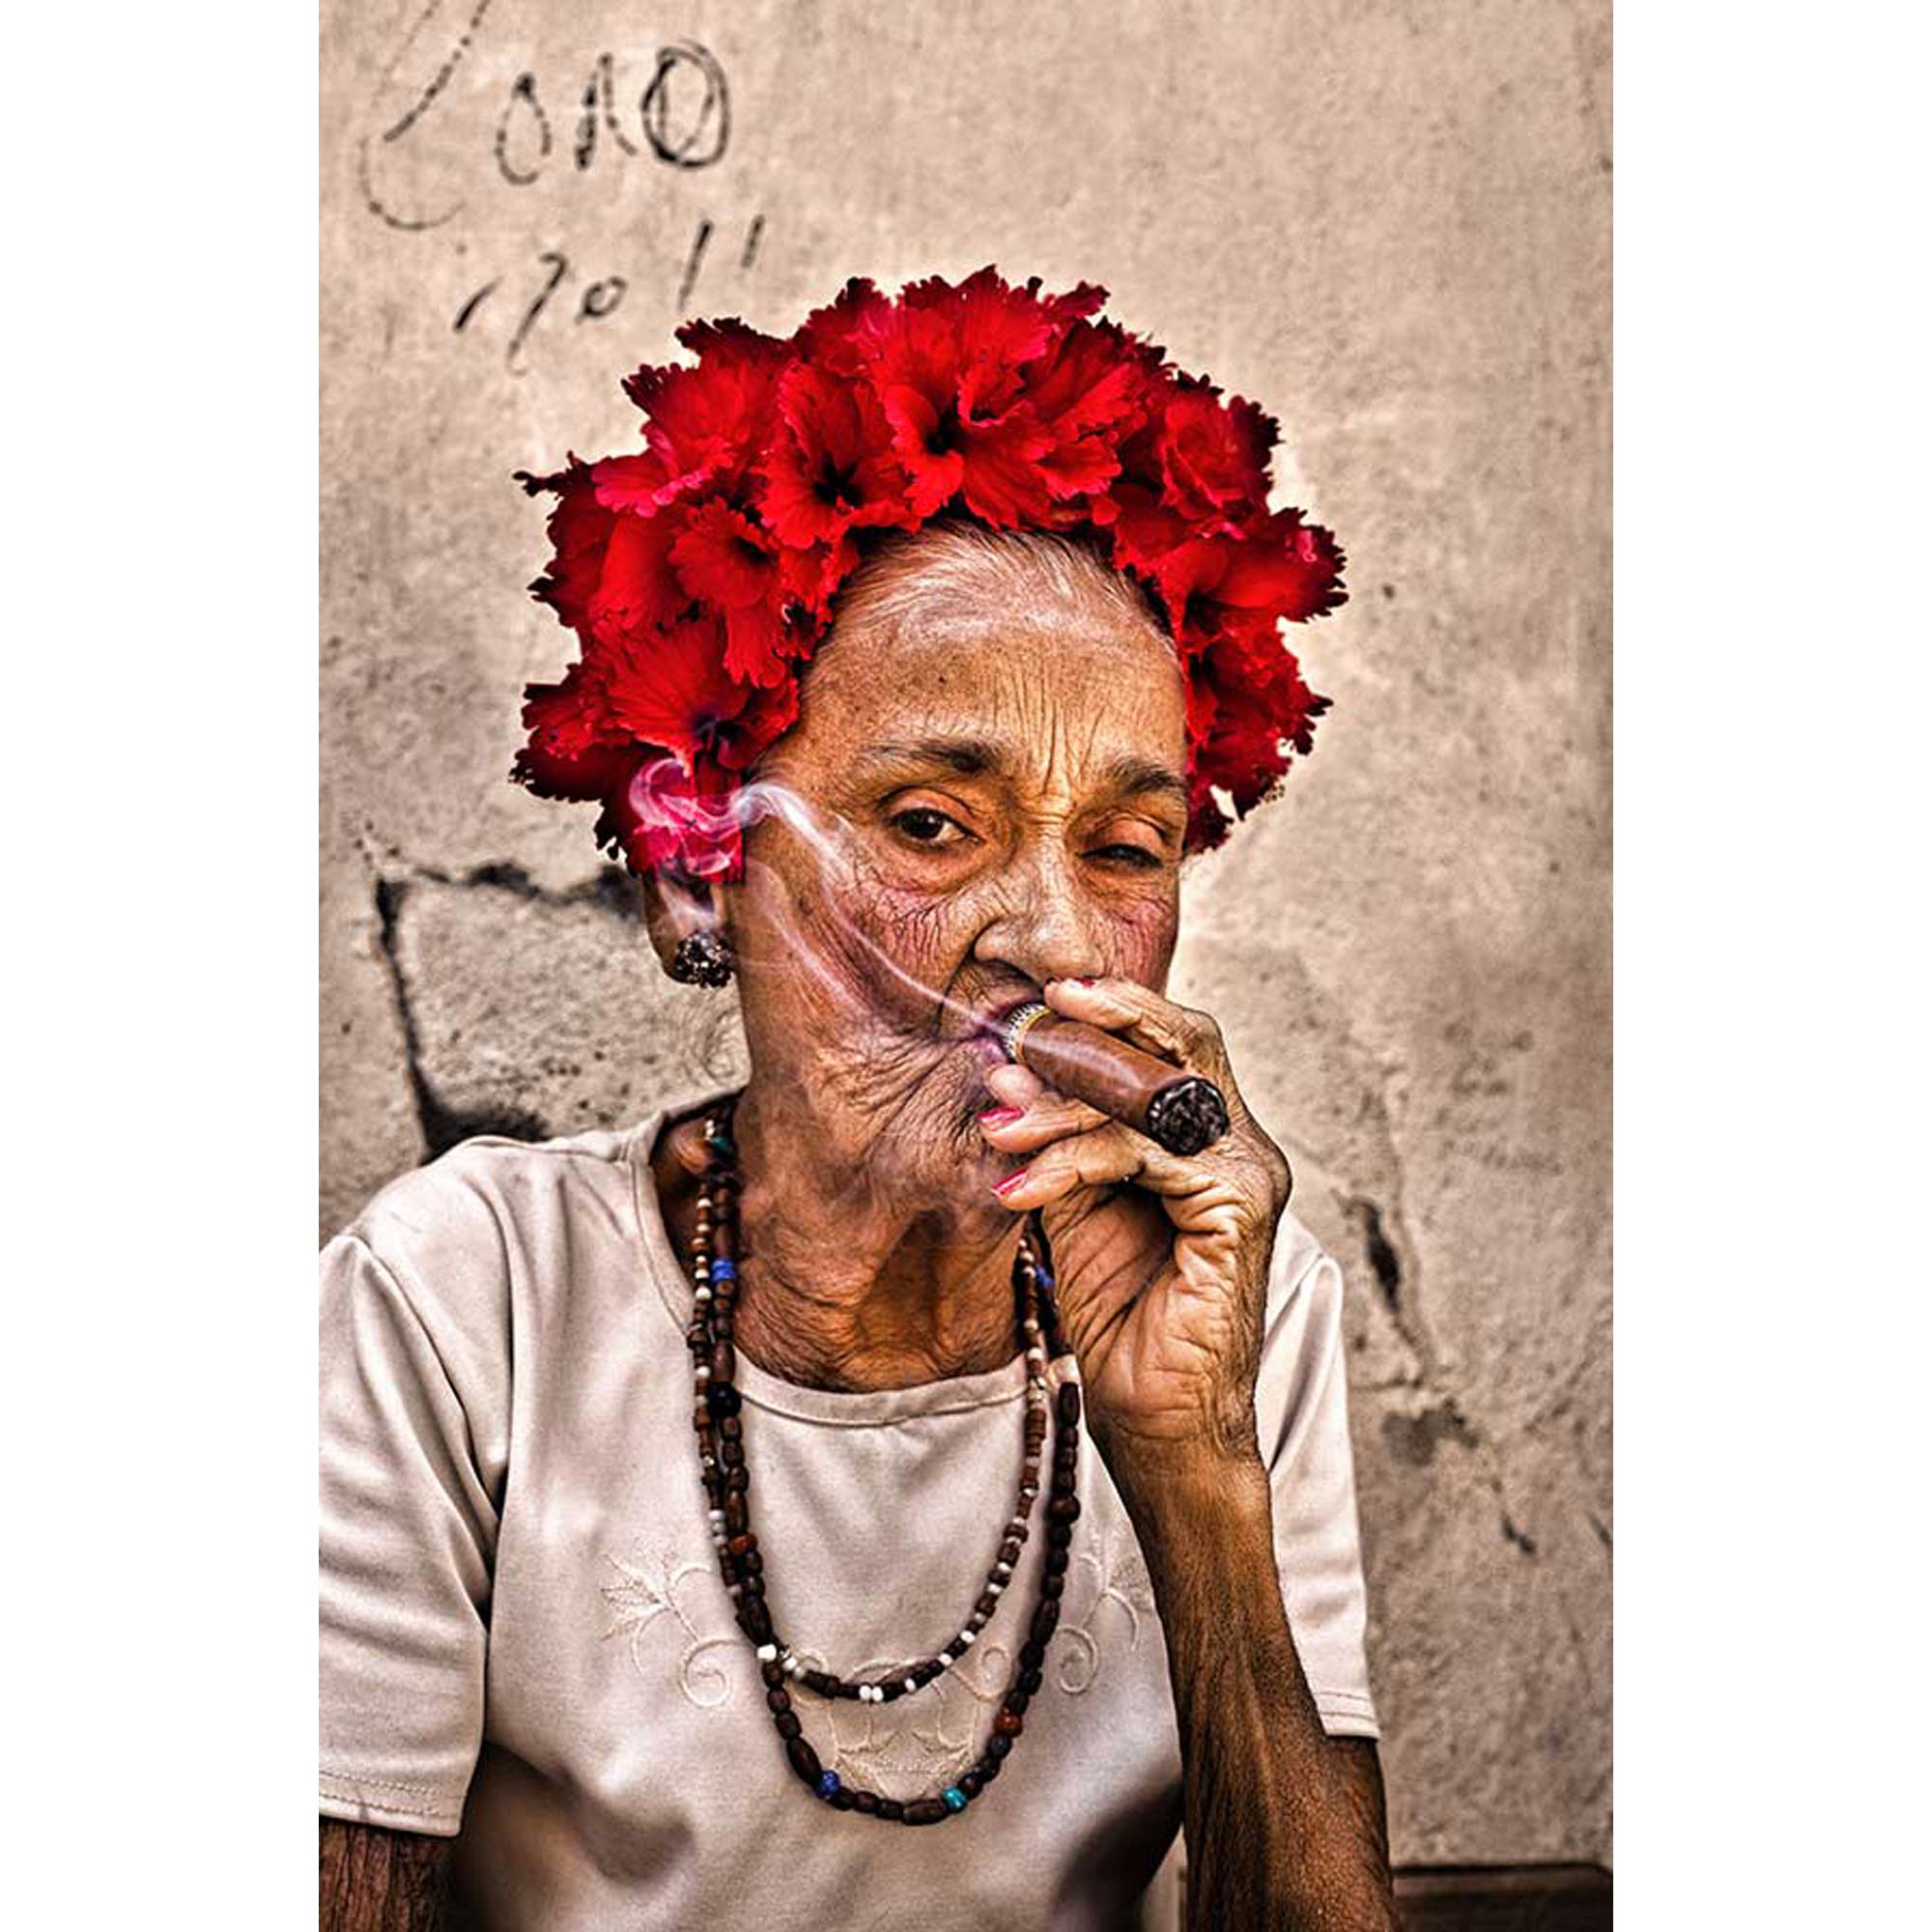 "Smoking Lady" - Elva - by Rehahn - 250 cigars